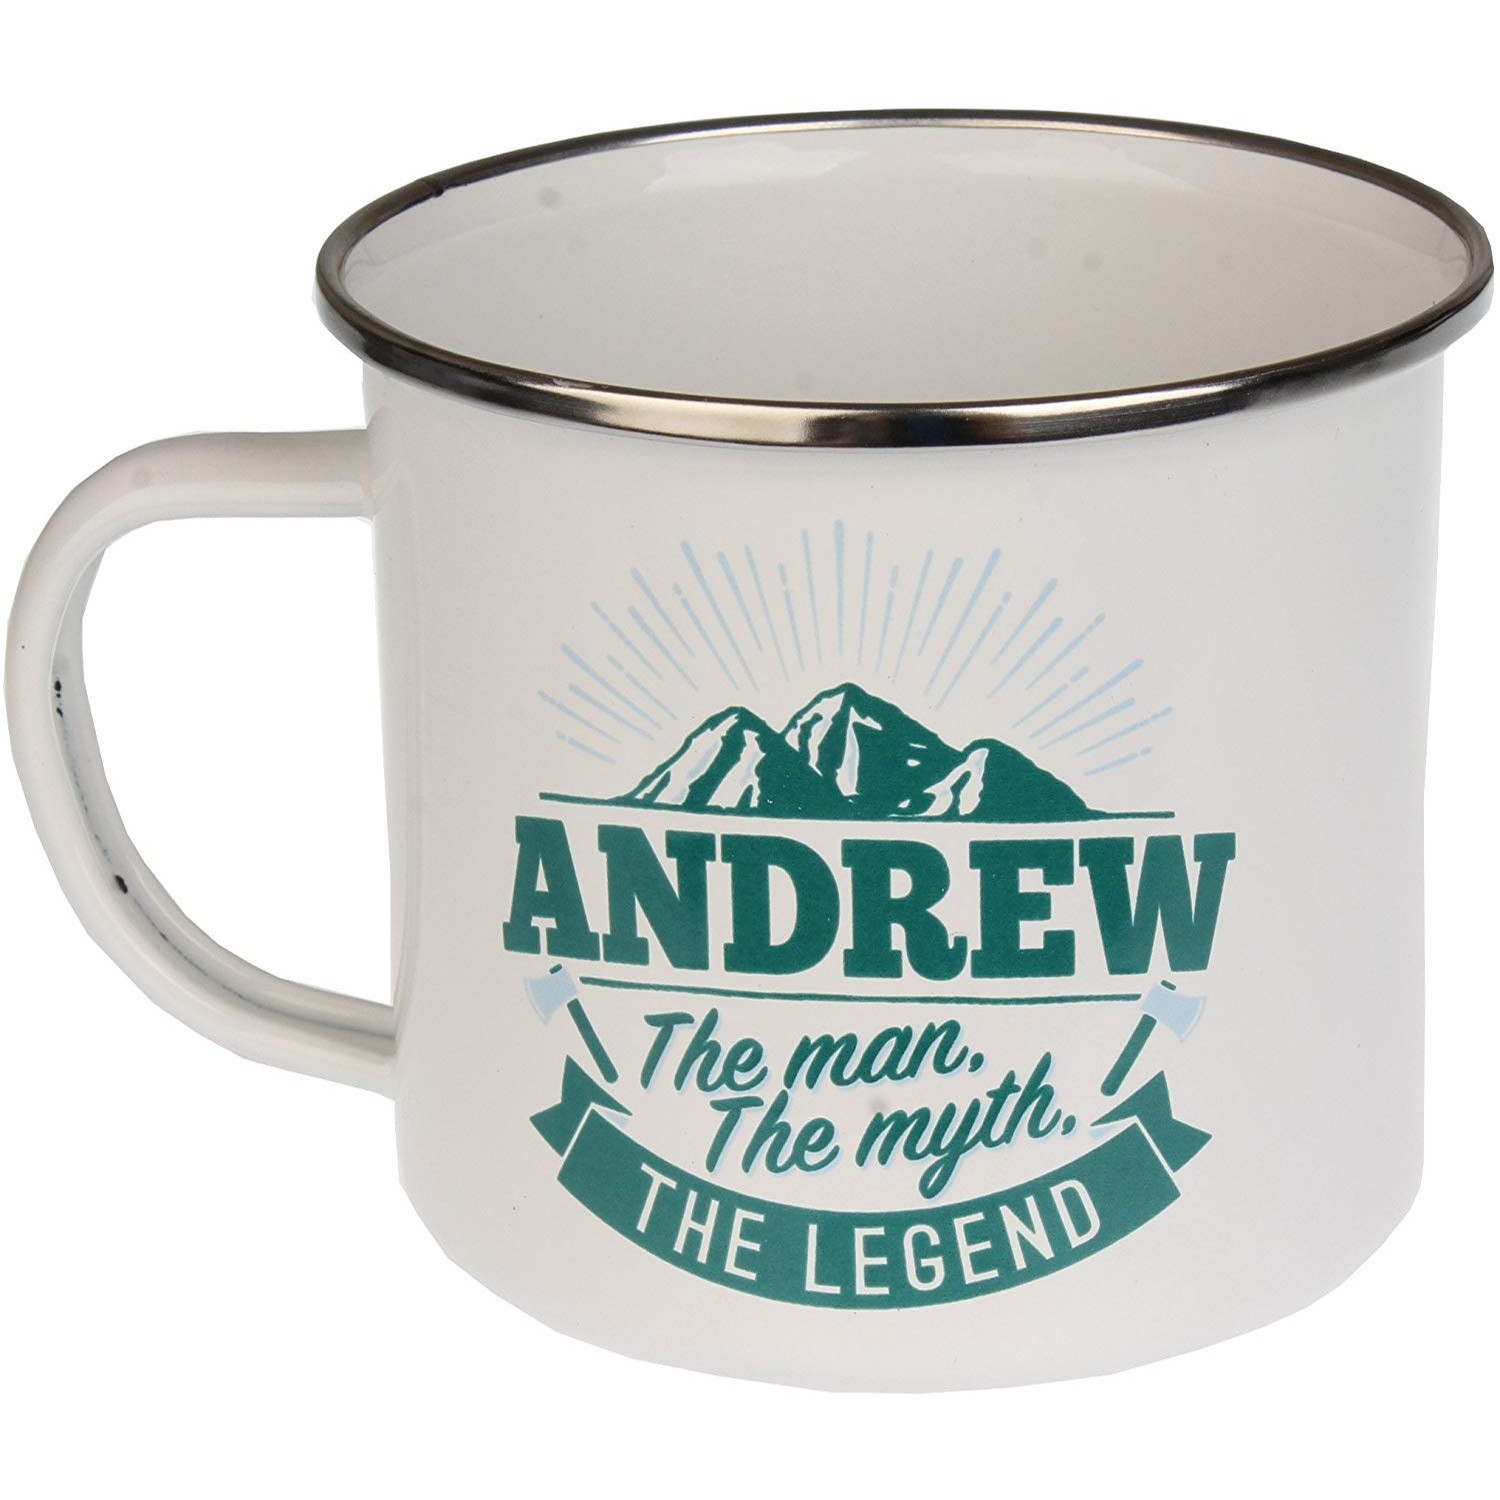 Top Guy Enamel Mugs (Andrew)